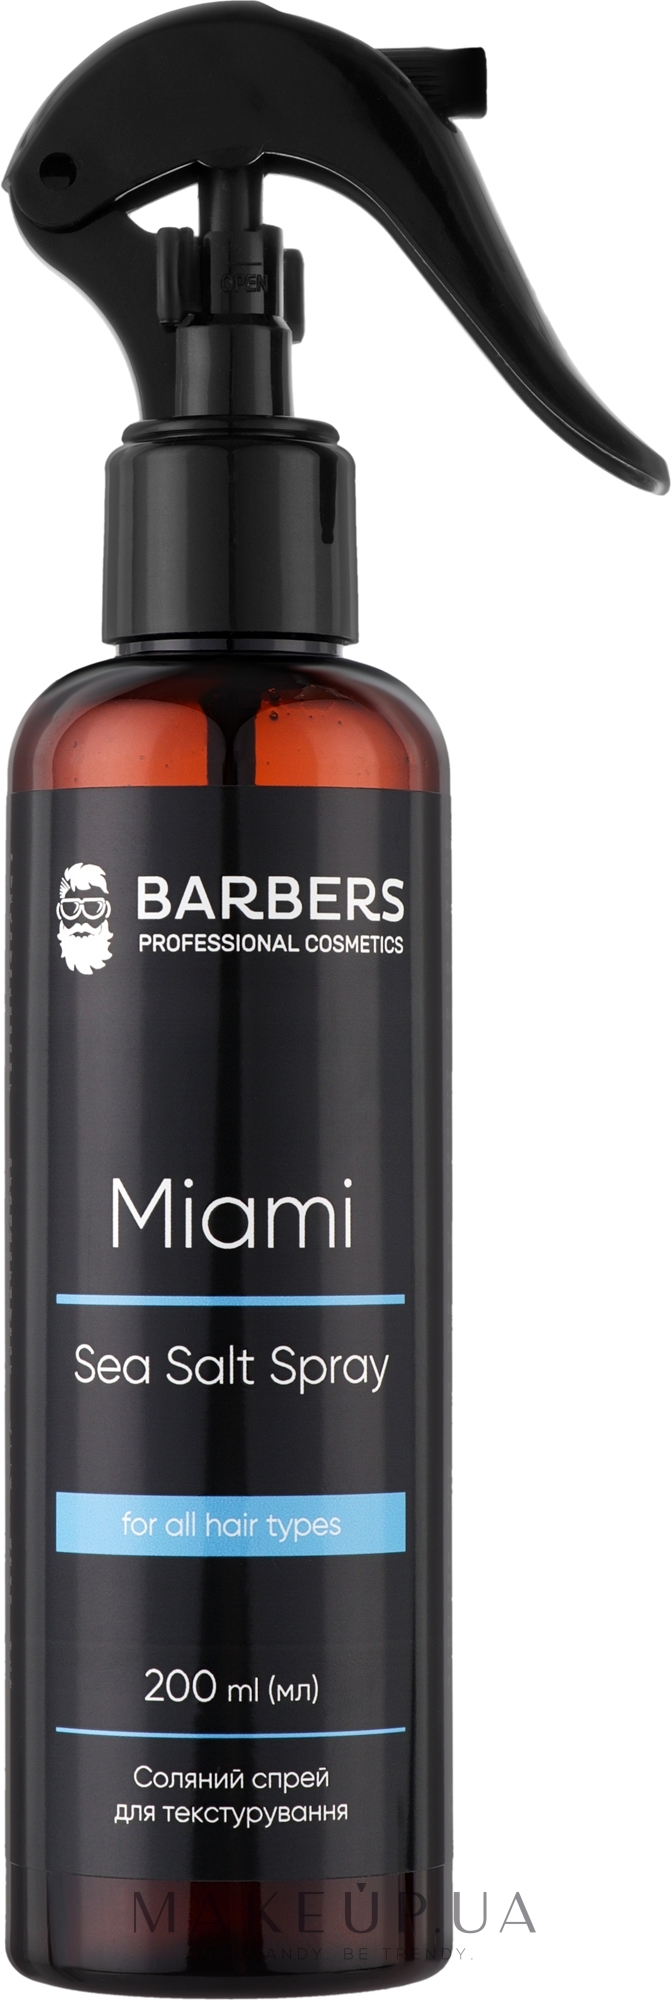 Текстурирующий солевой спрей для волос - Barbers Miami Sea Salt Spray — фото 200ml